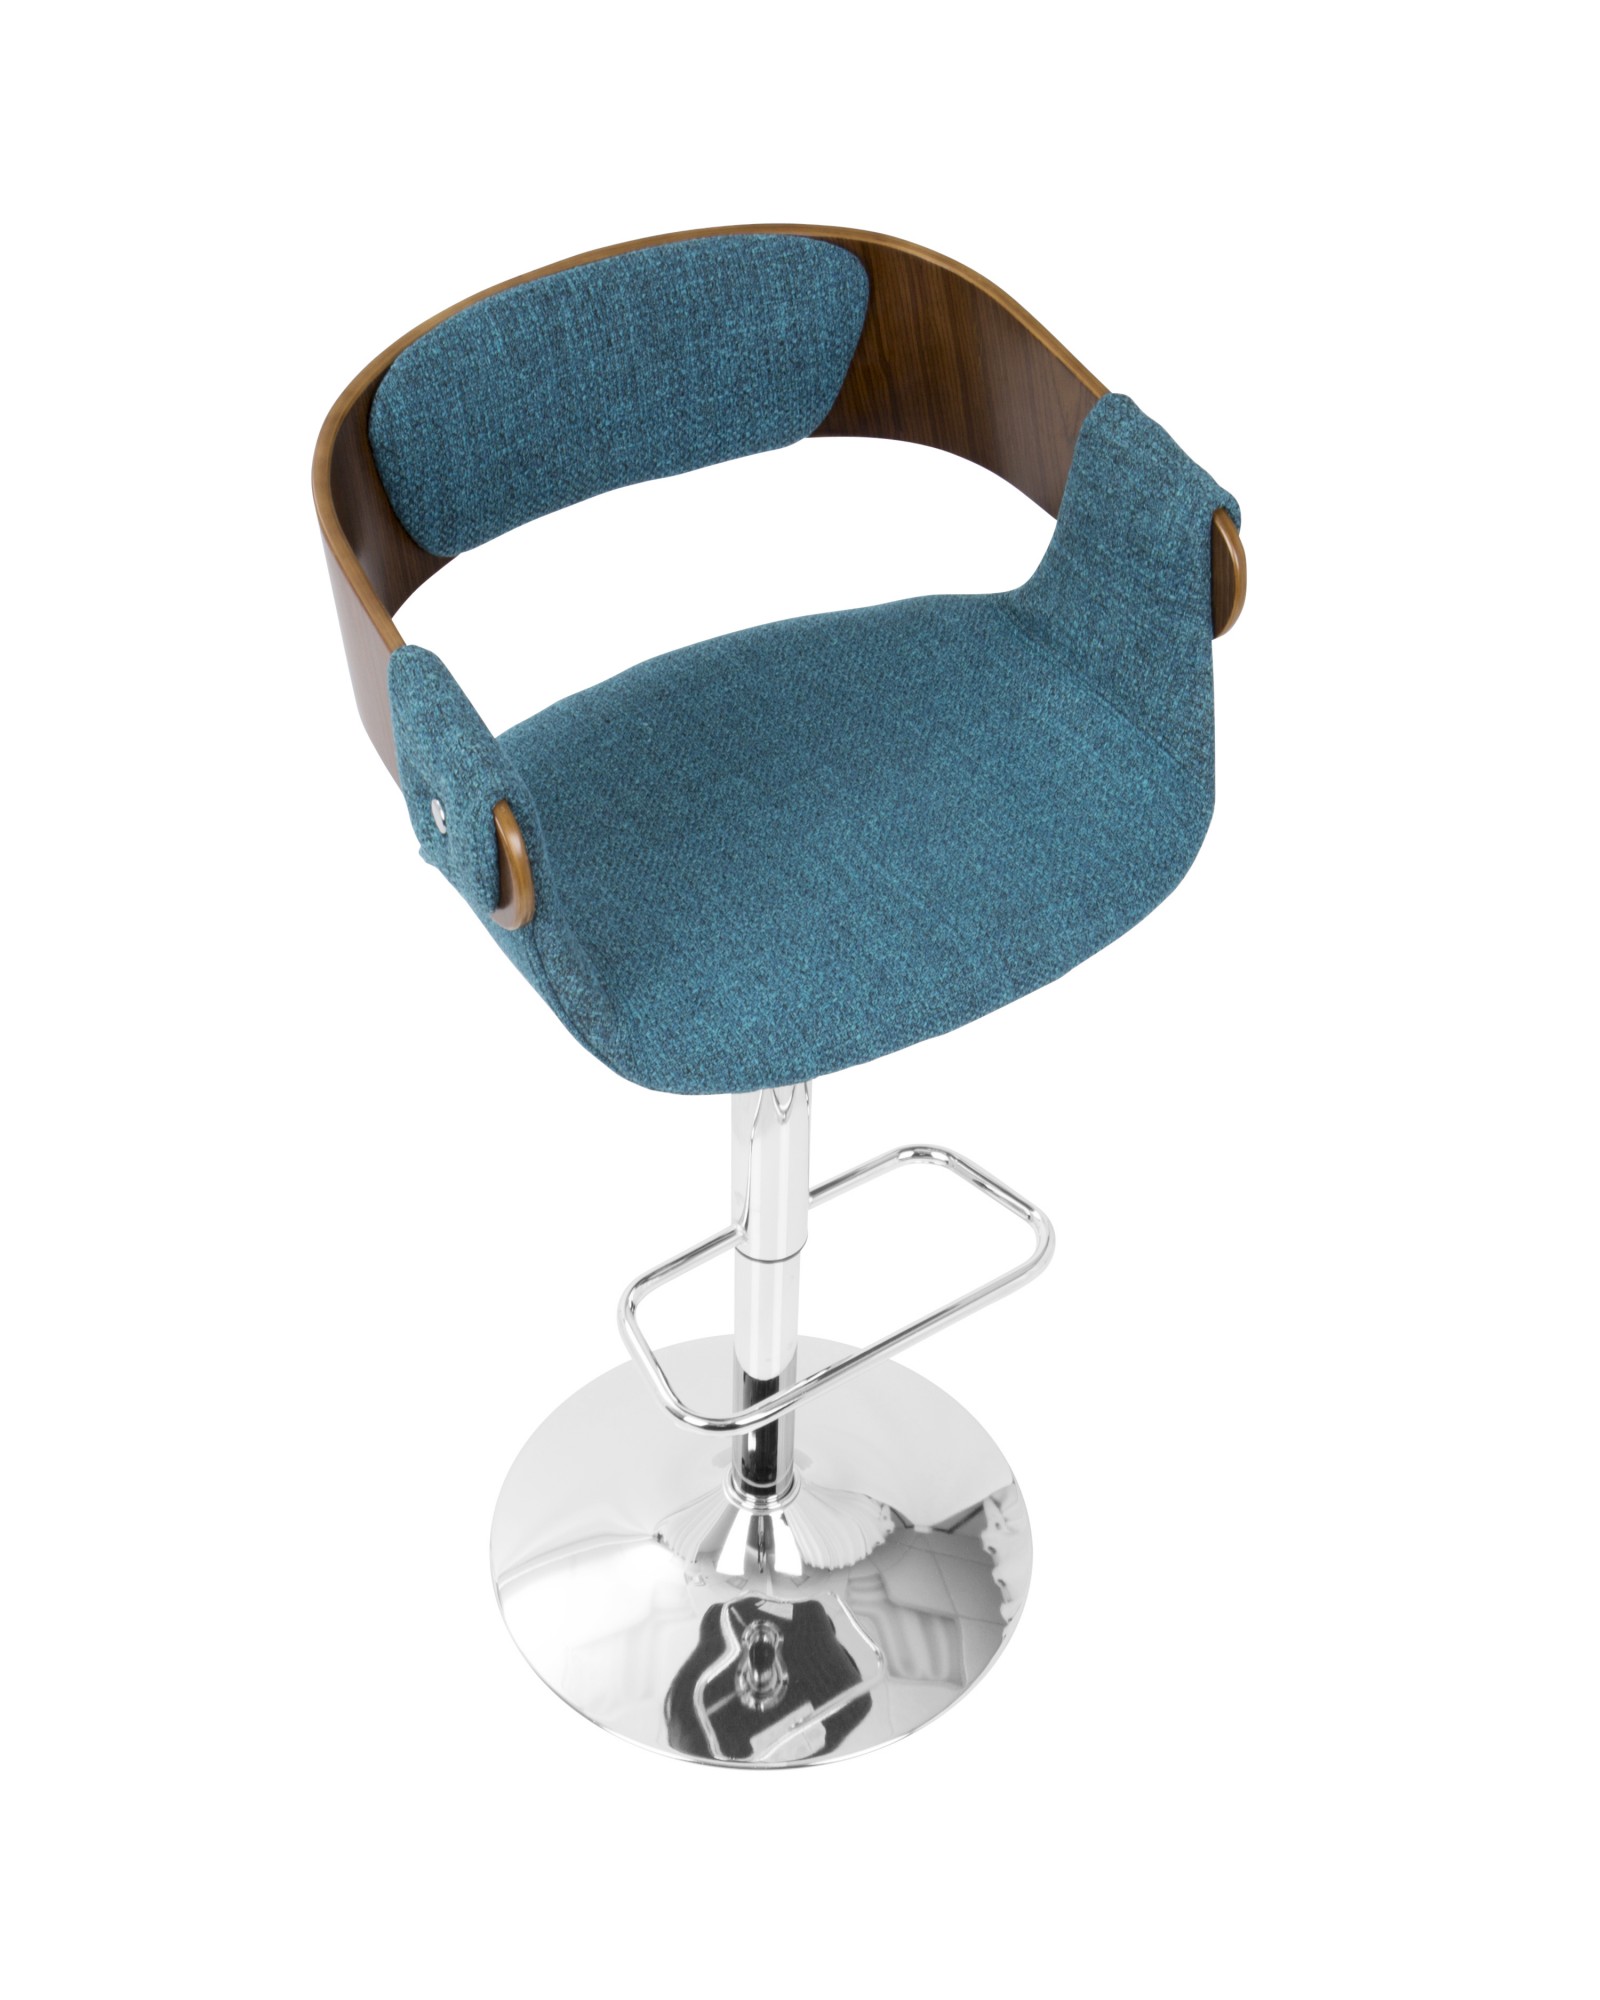 Envi Mid-Century Modern Adjustable Barstool in Walnut and Blue Teal